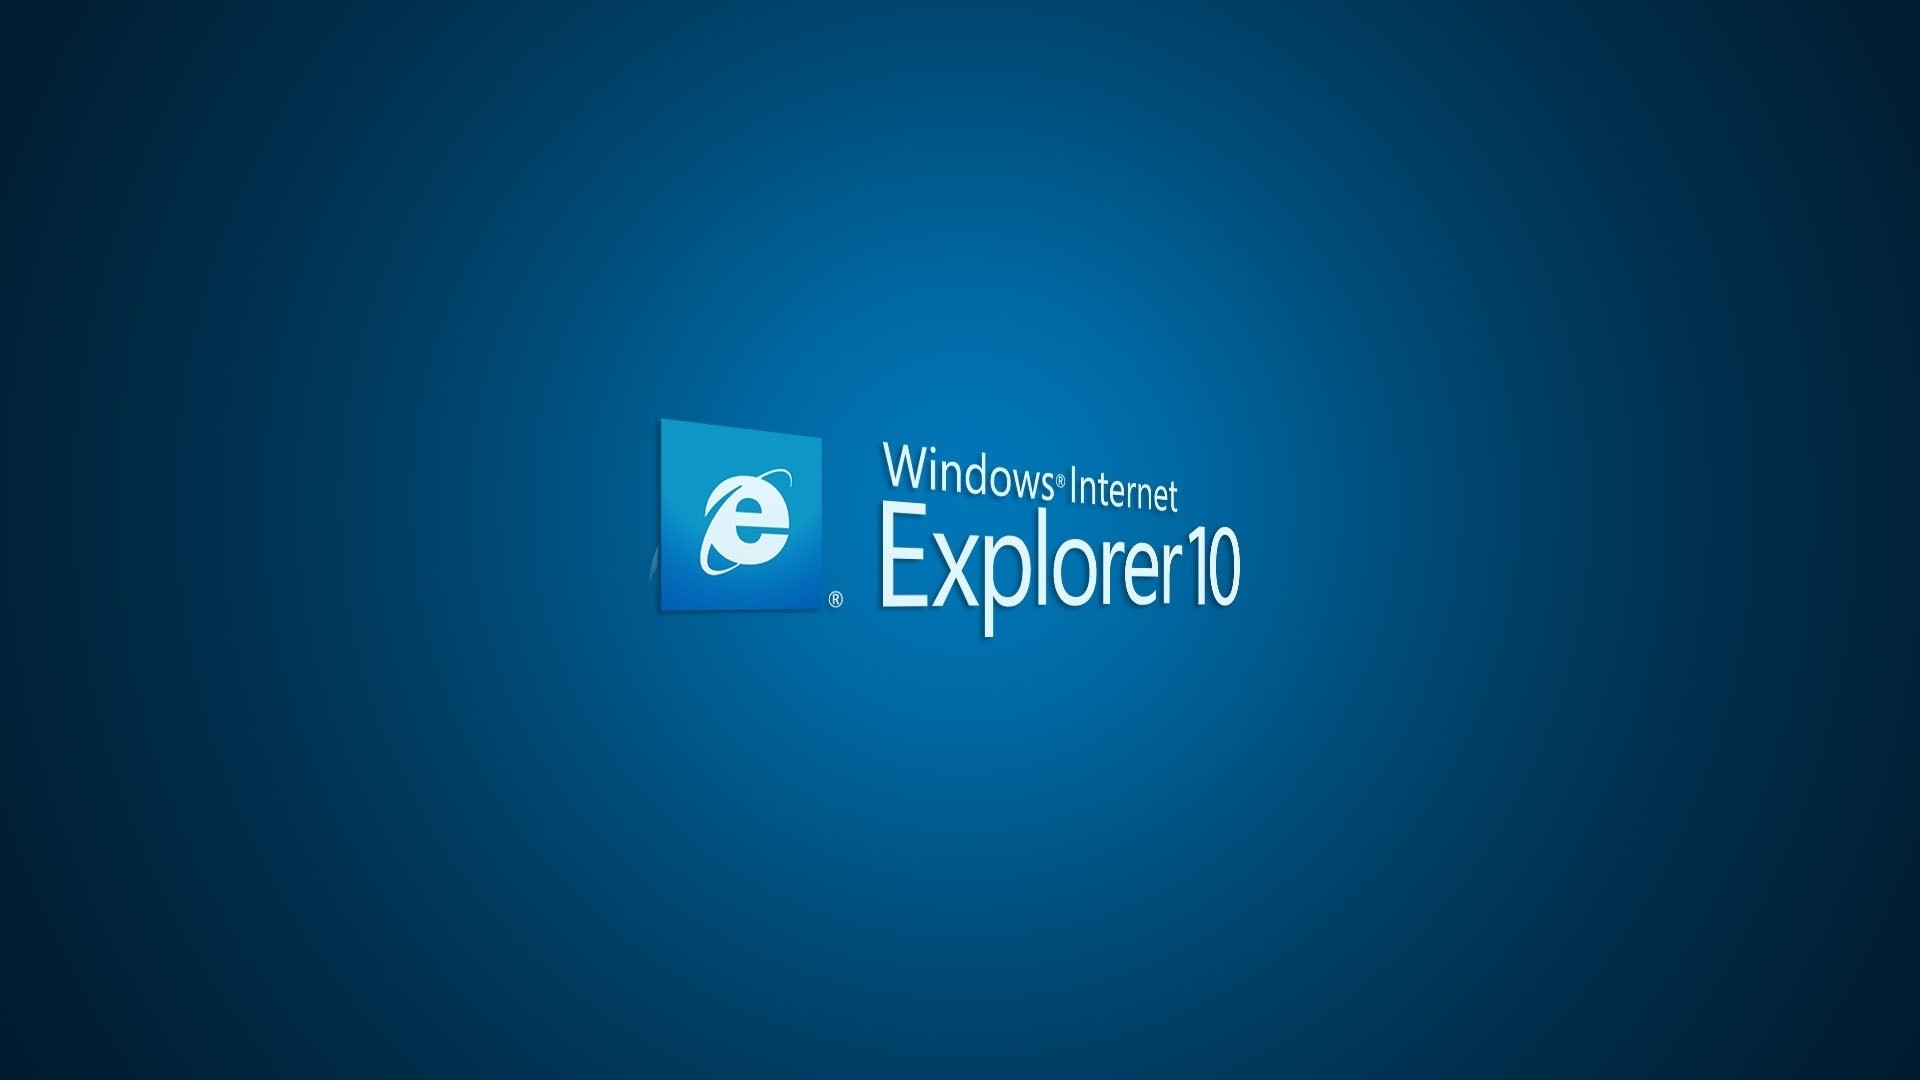 Internet Explorer Computer Digital Art Minimalism Blue Background 1920x1080